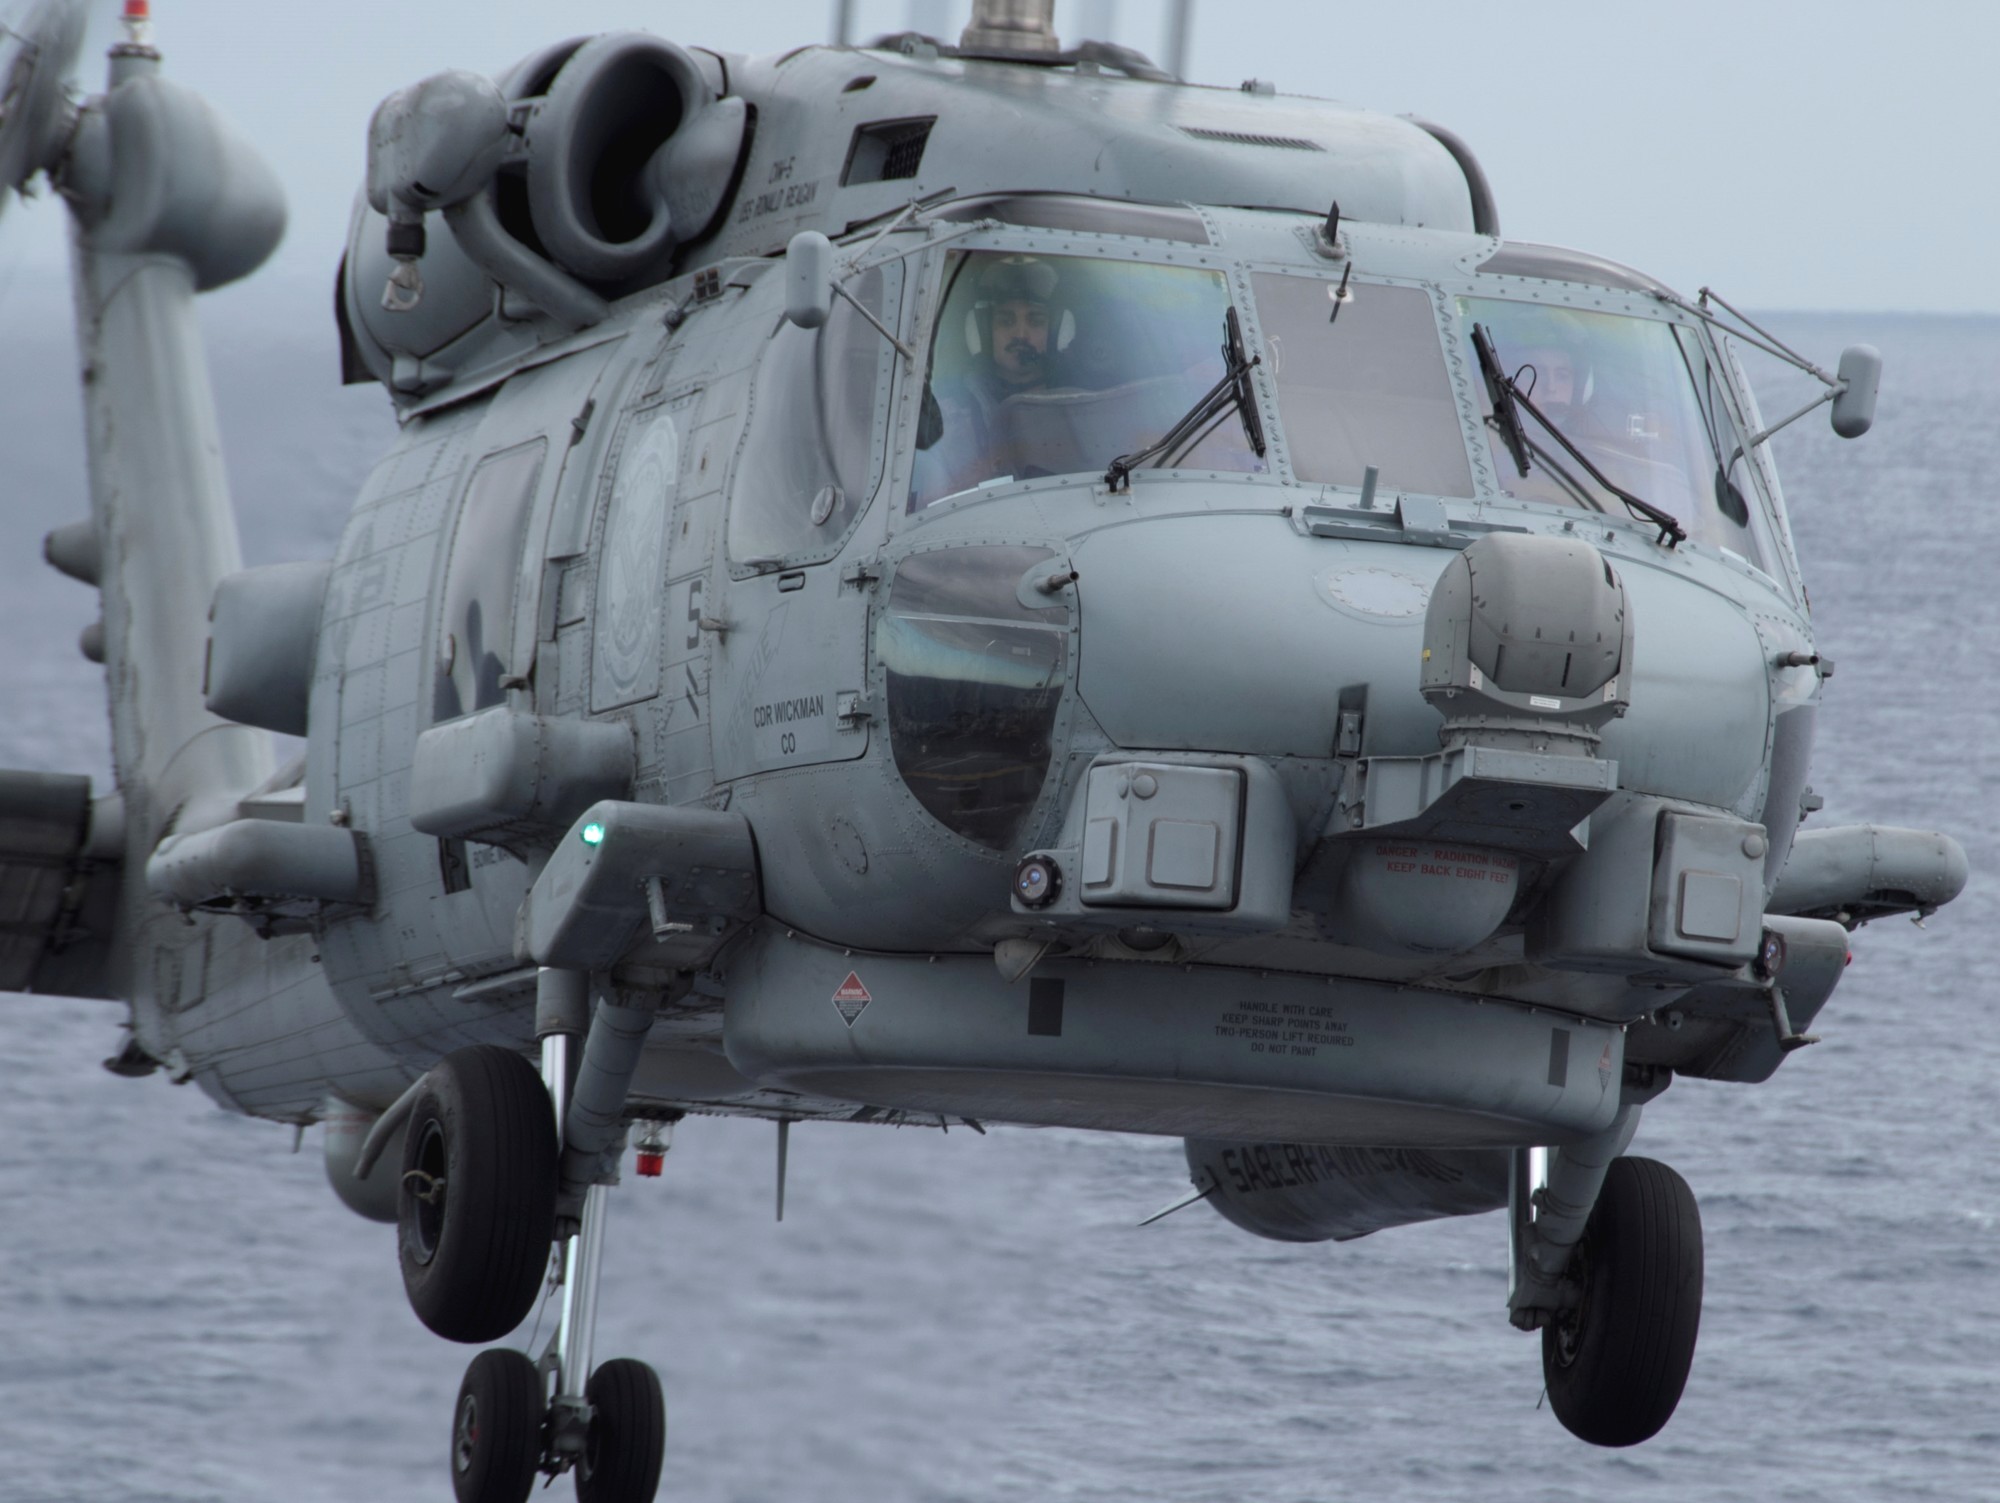 hsm-77 saberhawks helicopter maritime strike squadron us navy 2017 03 uss bonhomme richard lhd-6